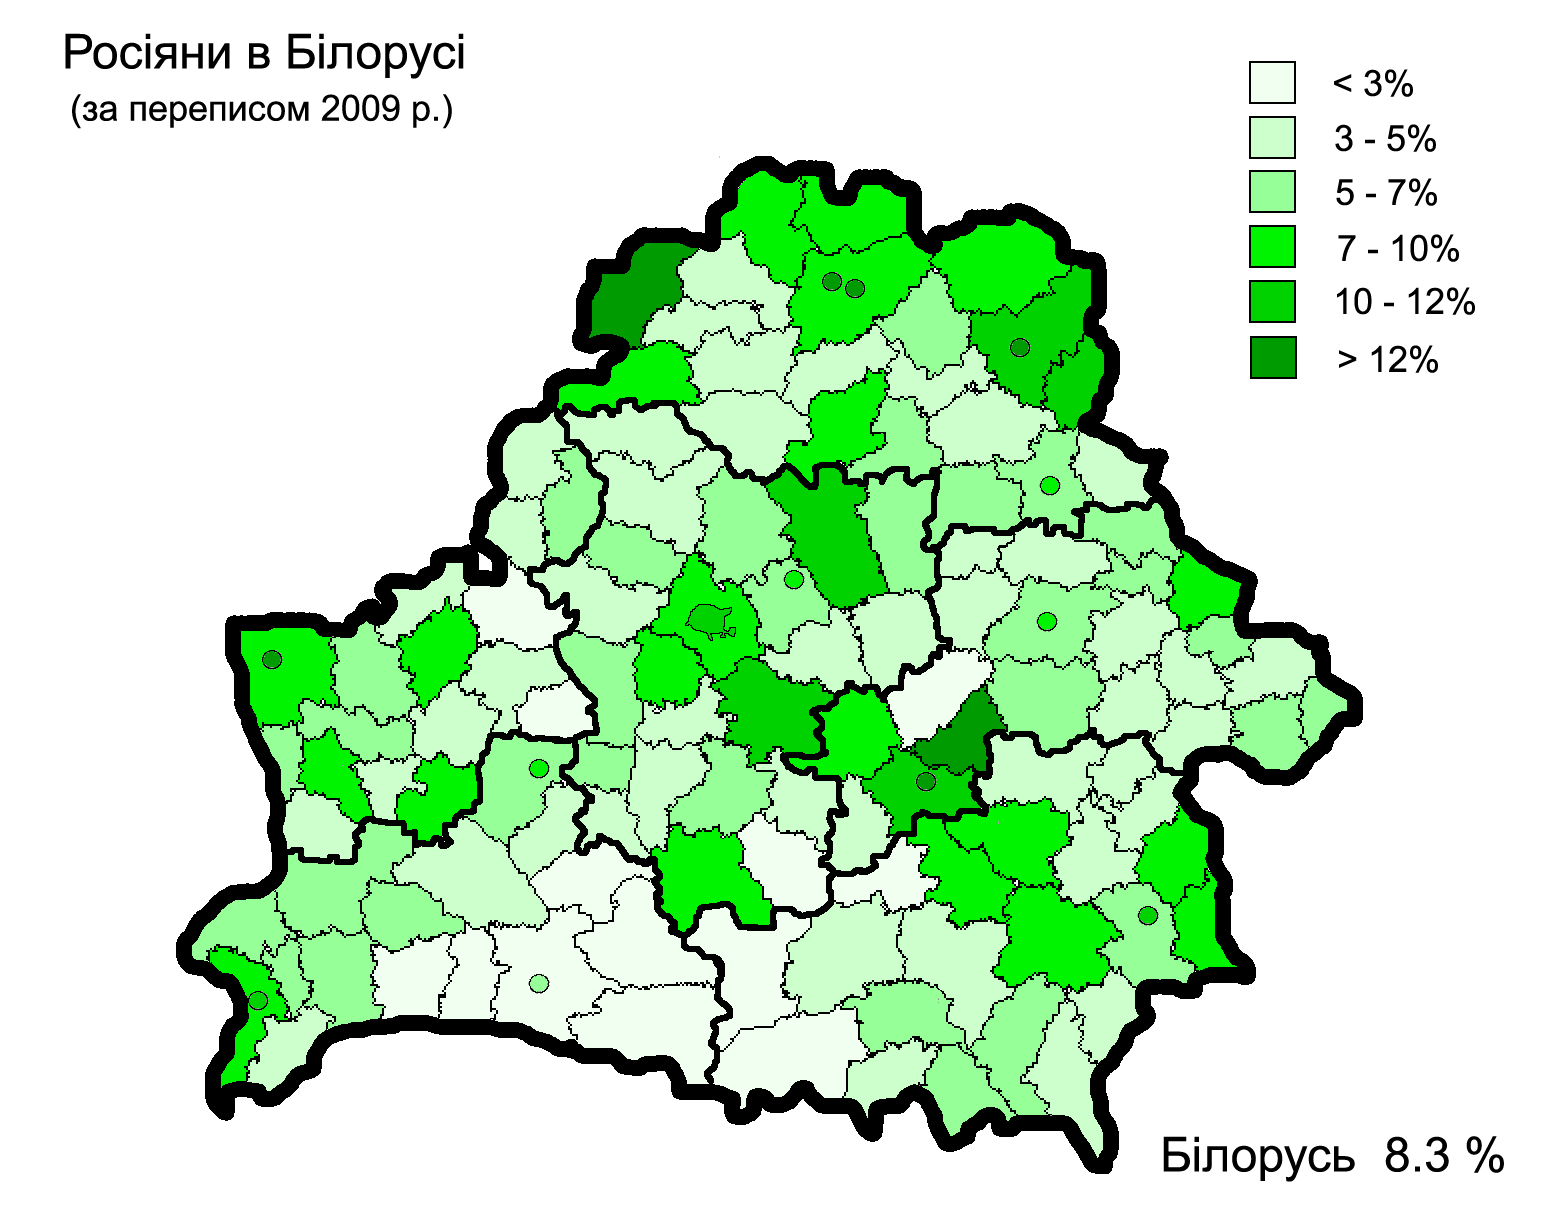 Demographics of Belarus - Wikipedia, the free encyclopedia